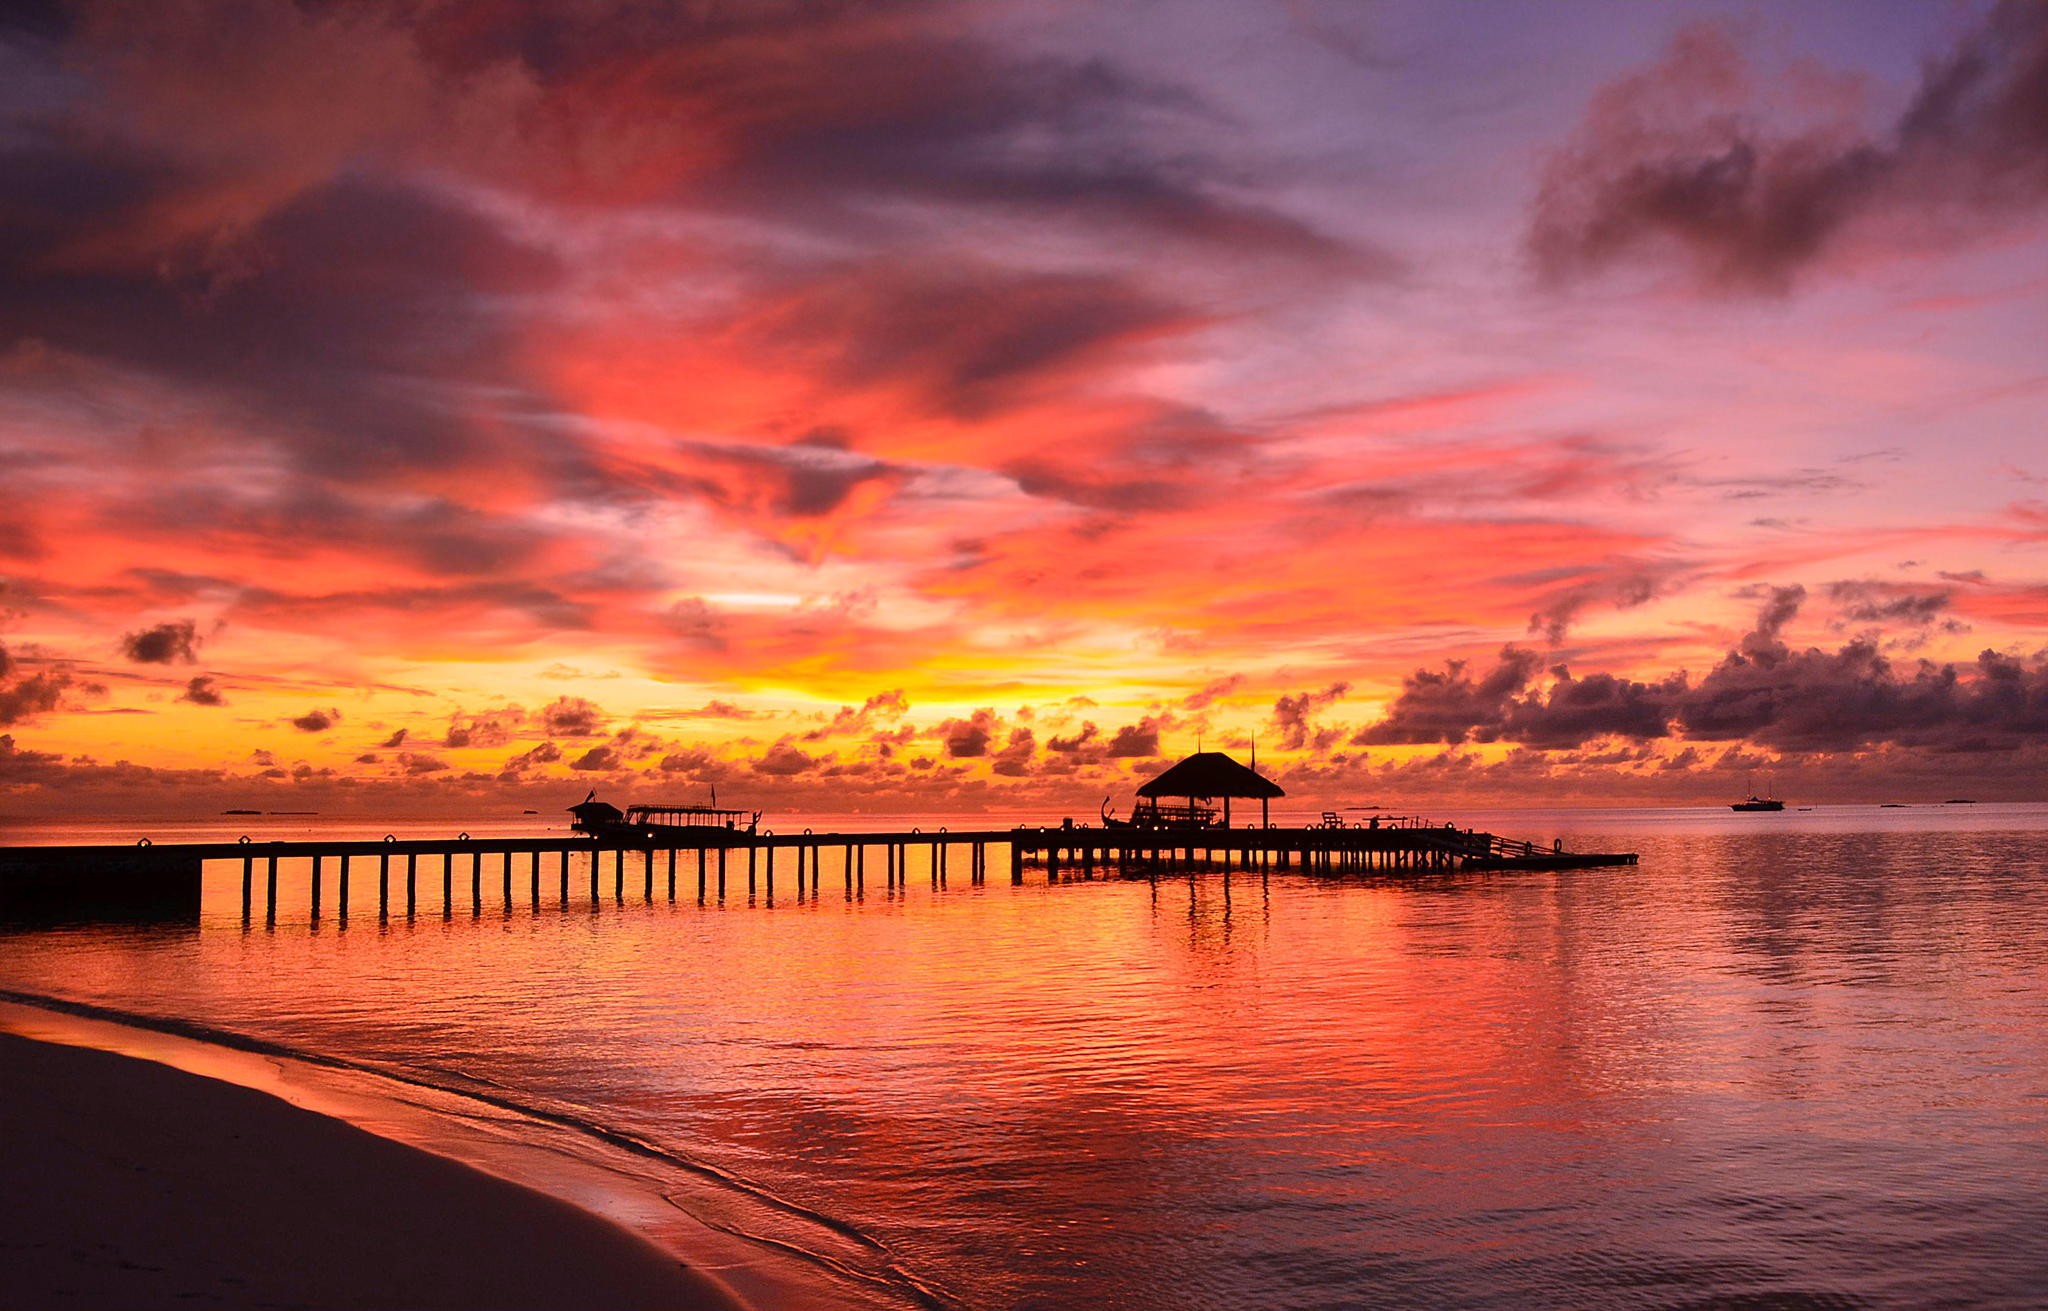 General 2048x1311 sea clouds sky orange sky colorful sunlight pier beach outdoors low light